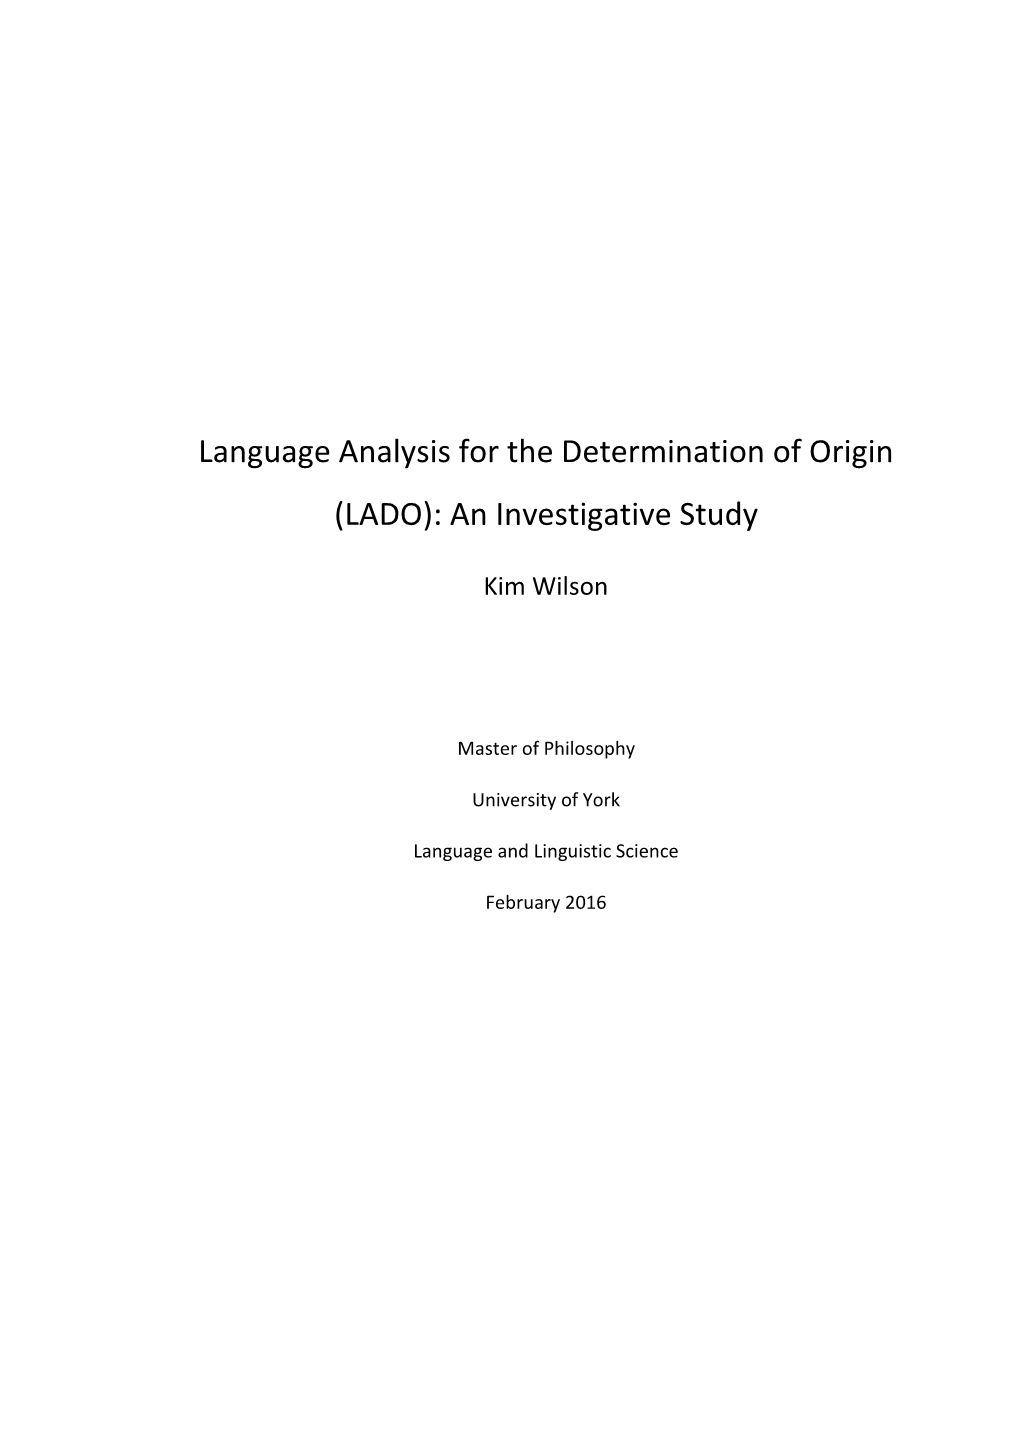 Language Analysis for the Determination of Origin (LADO): an Investigative Study